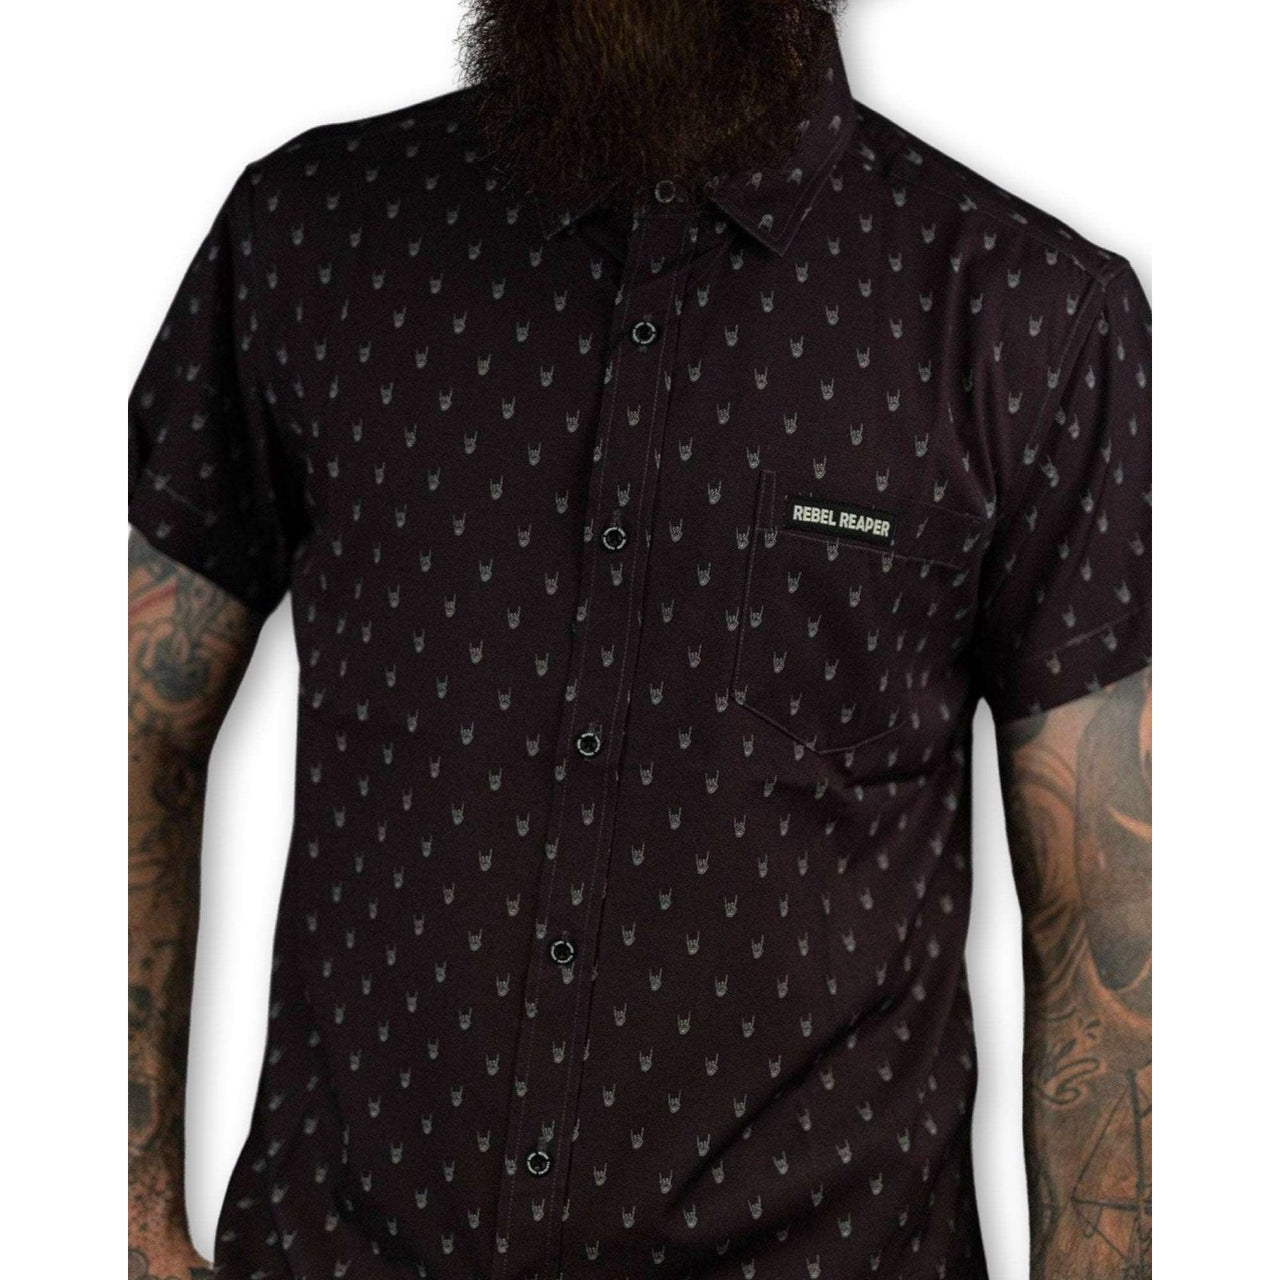 Maroon Metal Hand Shirt - Rebel Reaper Clothing Company Button Up Shirt Men's